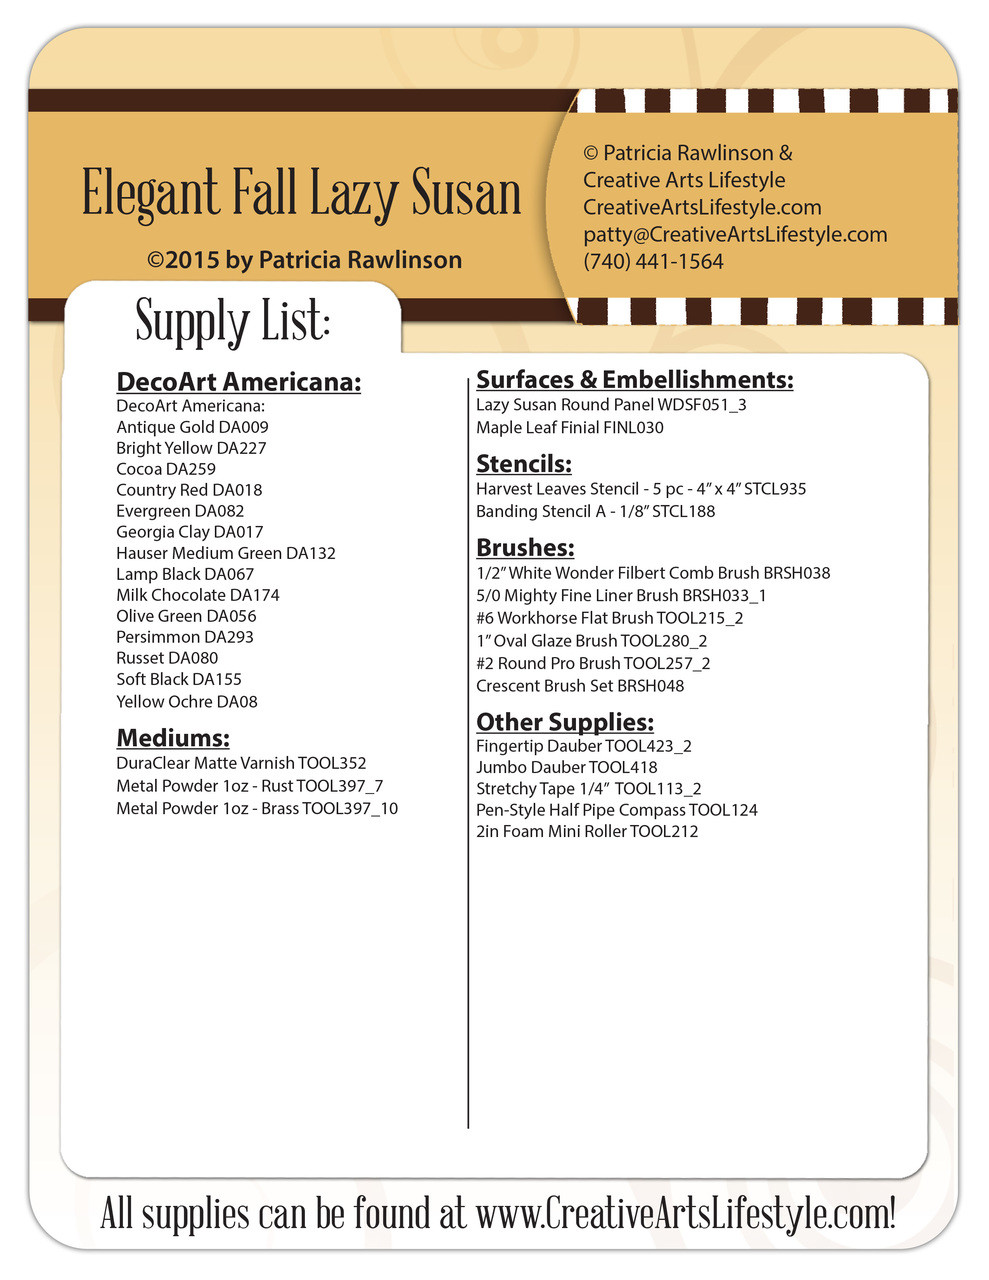 Elegant Fall Lazy Susan DVD and Pattern Packet - Patricia Rawlinson